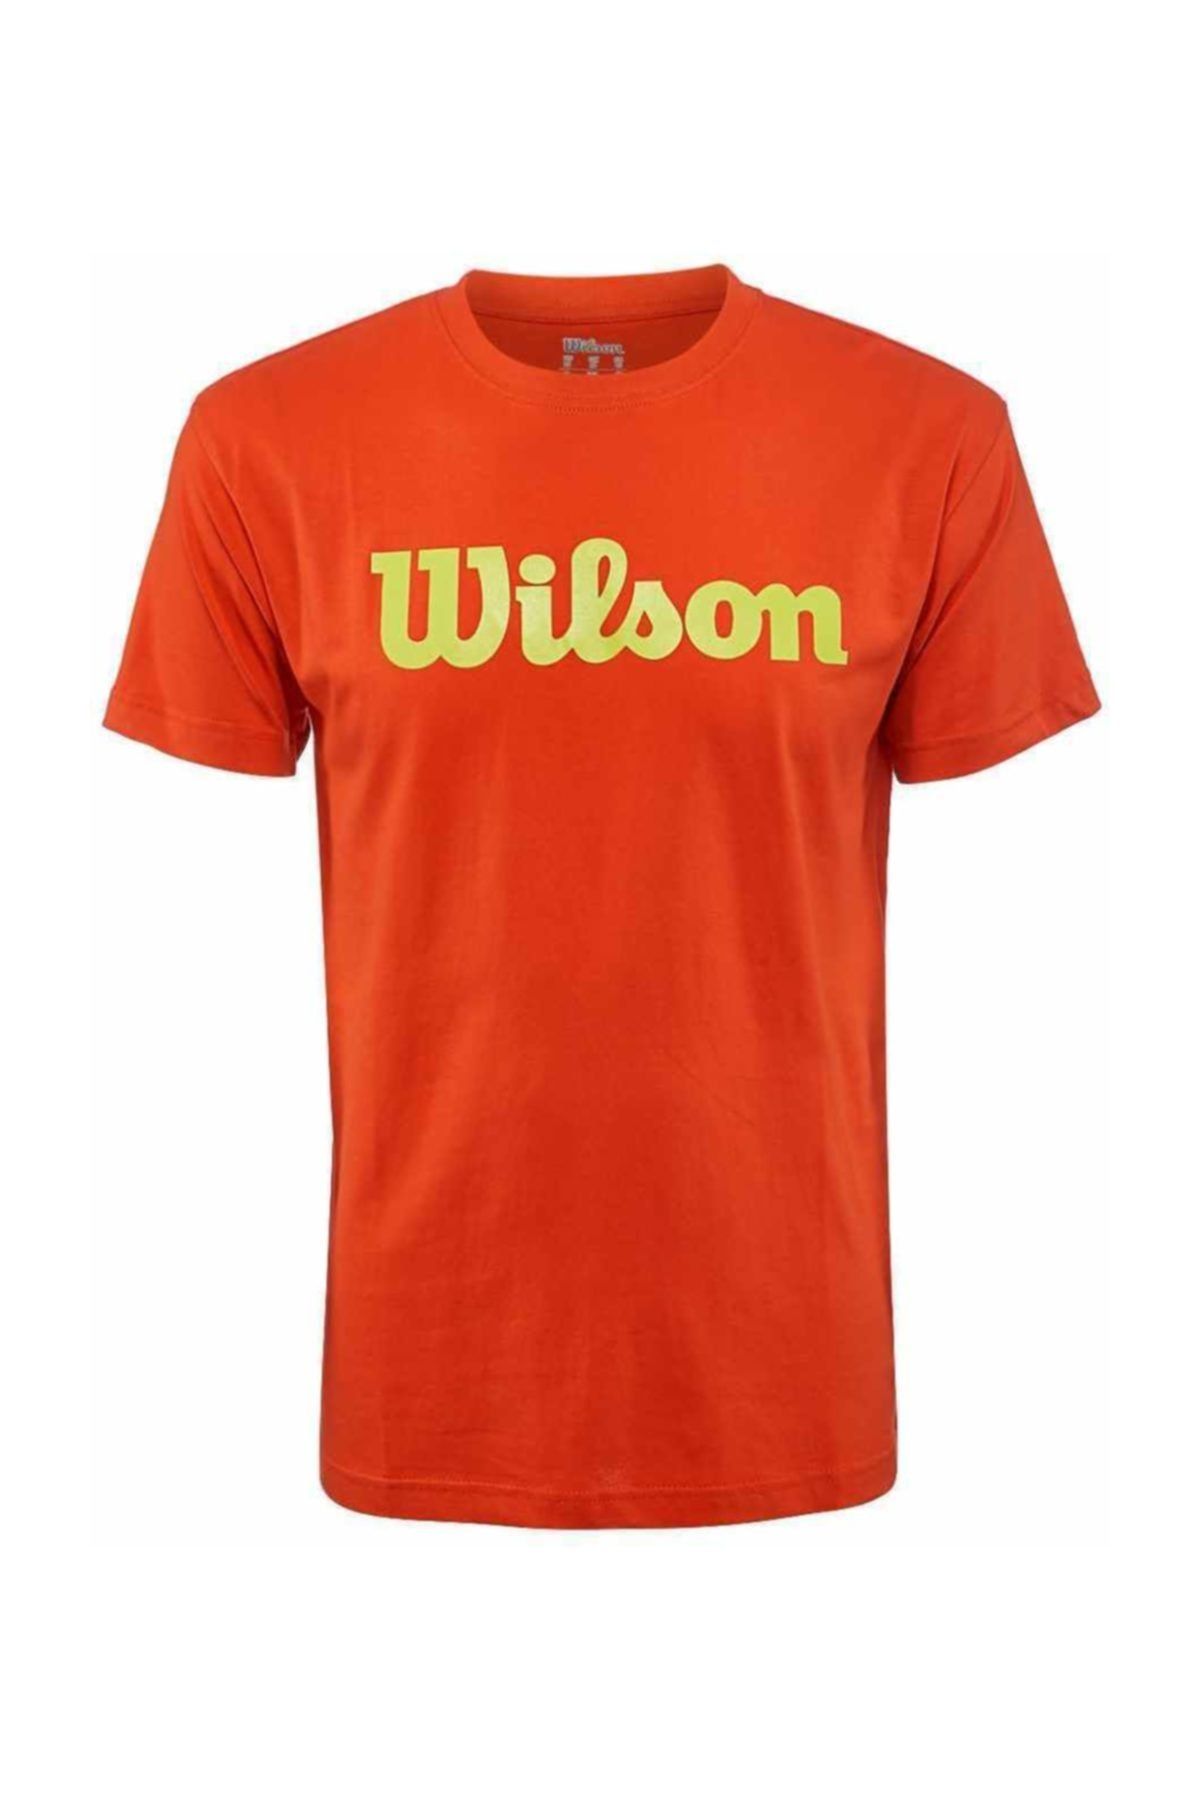 Wilson M Script Logo Cotton Turuncu Erkek Tenis T-shirt